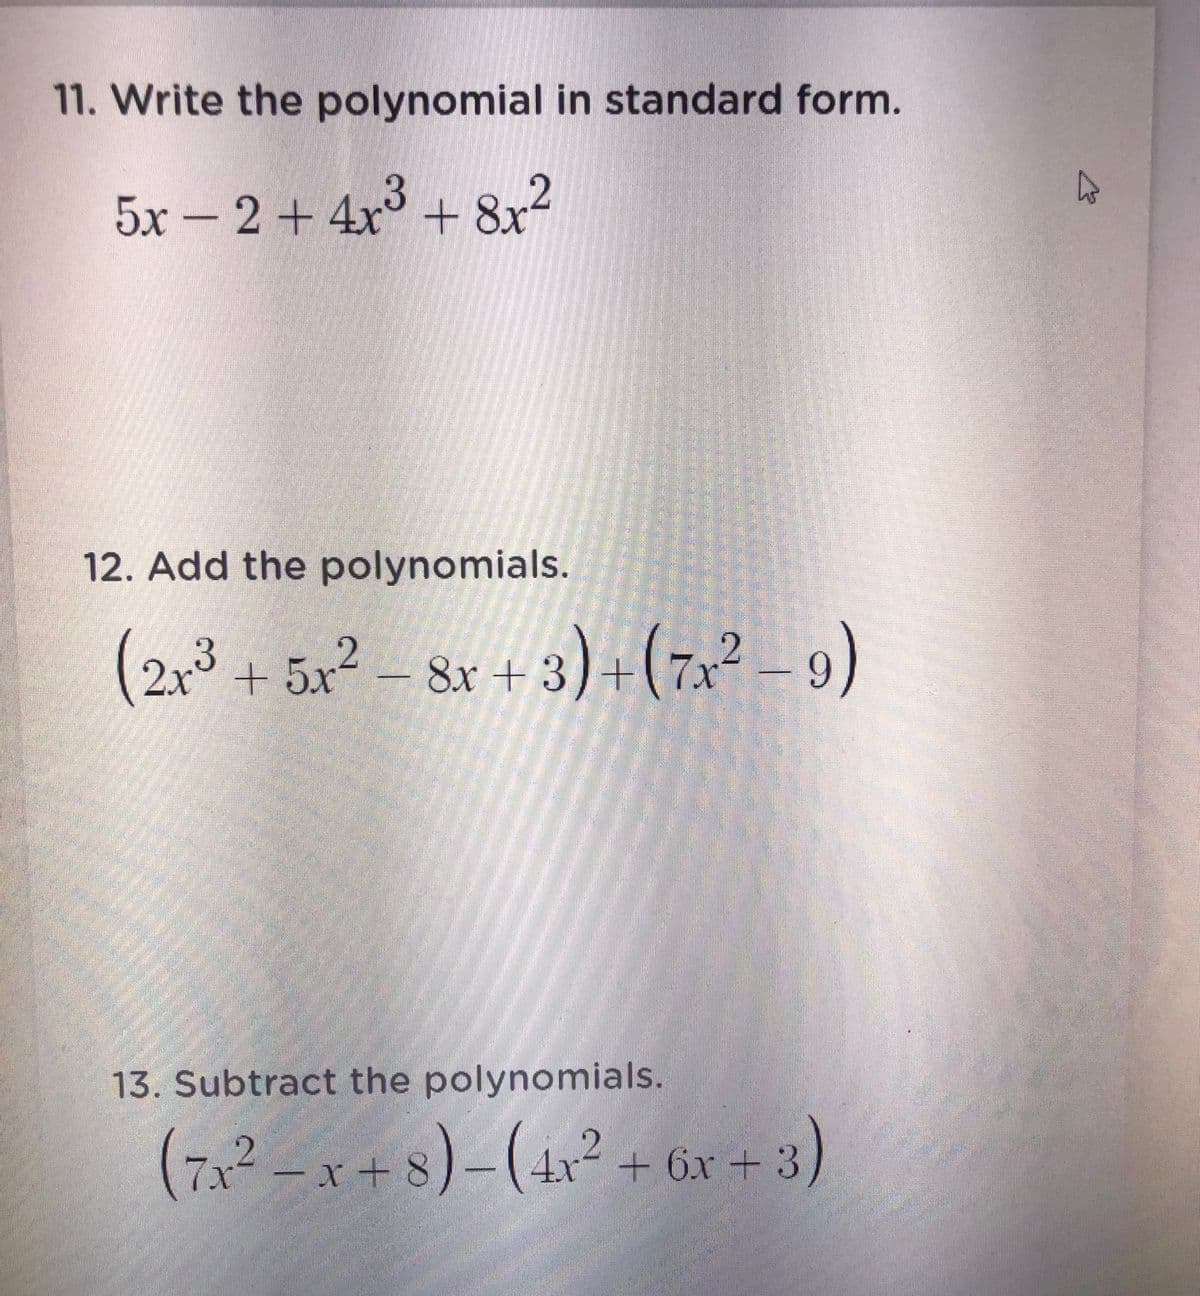 11. Write the polynomial in standard form.
3
5x - 2 + 4x³ + 8x?
12. Add the polynomials.
(2, + 5x2 &x +
3)+(7x² – 9)
8x +
6.
13. Subtract the polynomials.
(7² – x + 8)-(4x² + 6xr + 3)
(7x2 – x+ 8)- (4x² + 6x + 3)
